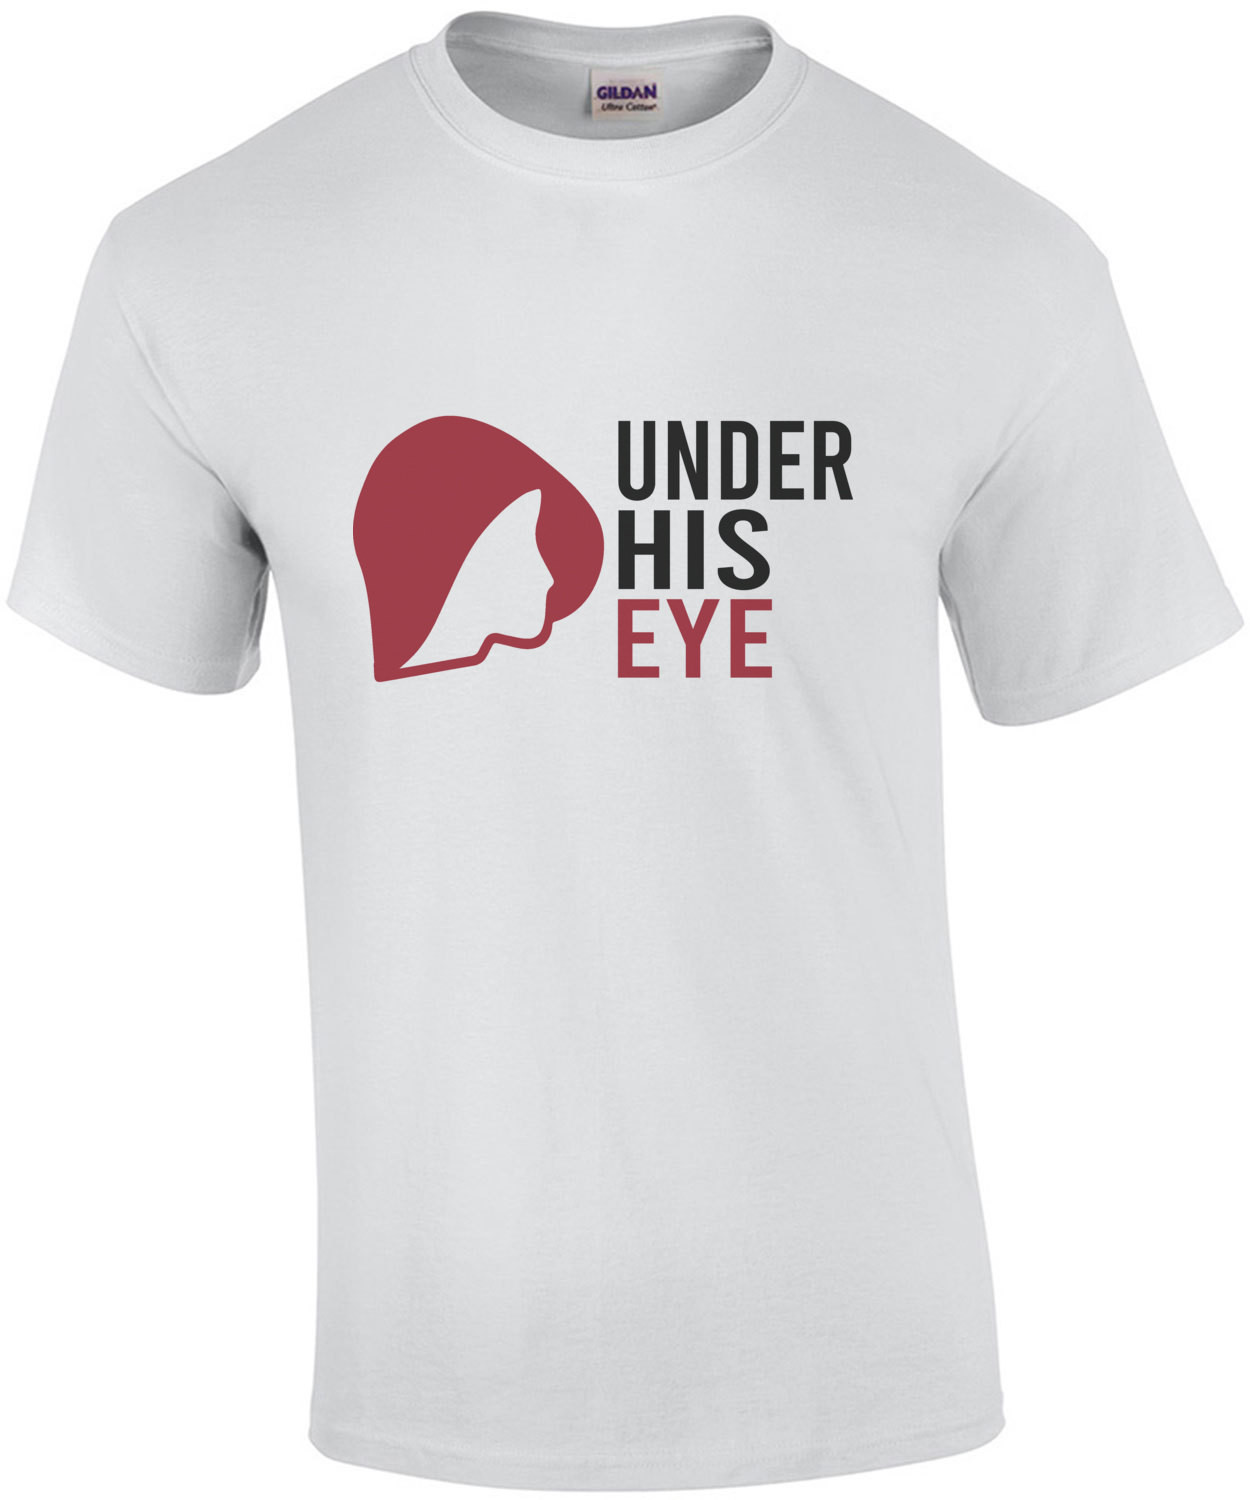 Under His Eye - The Handmaid's Tale T-Shirt